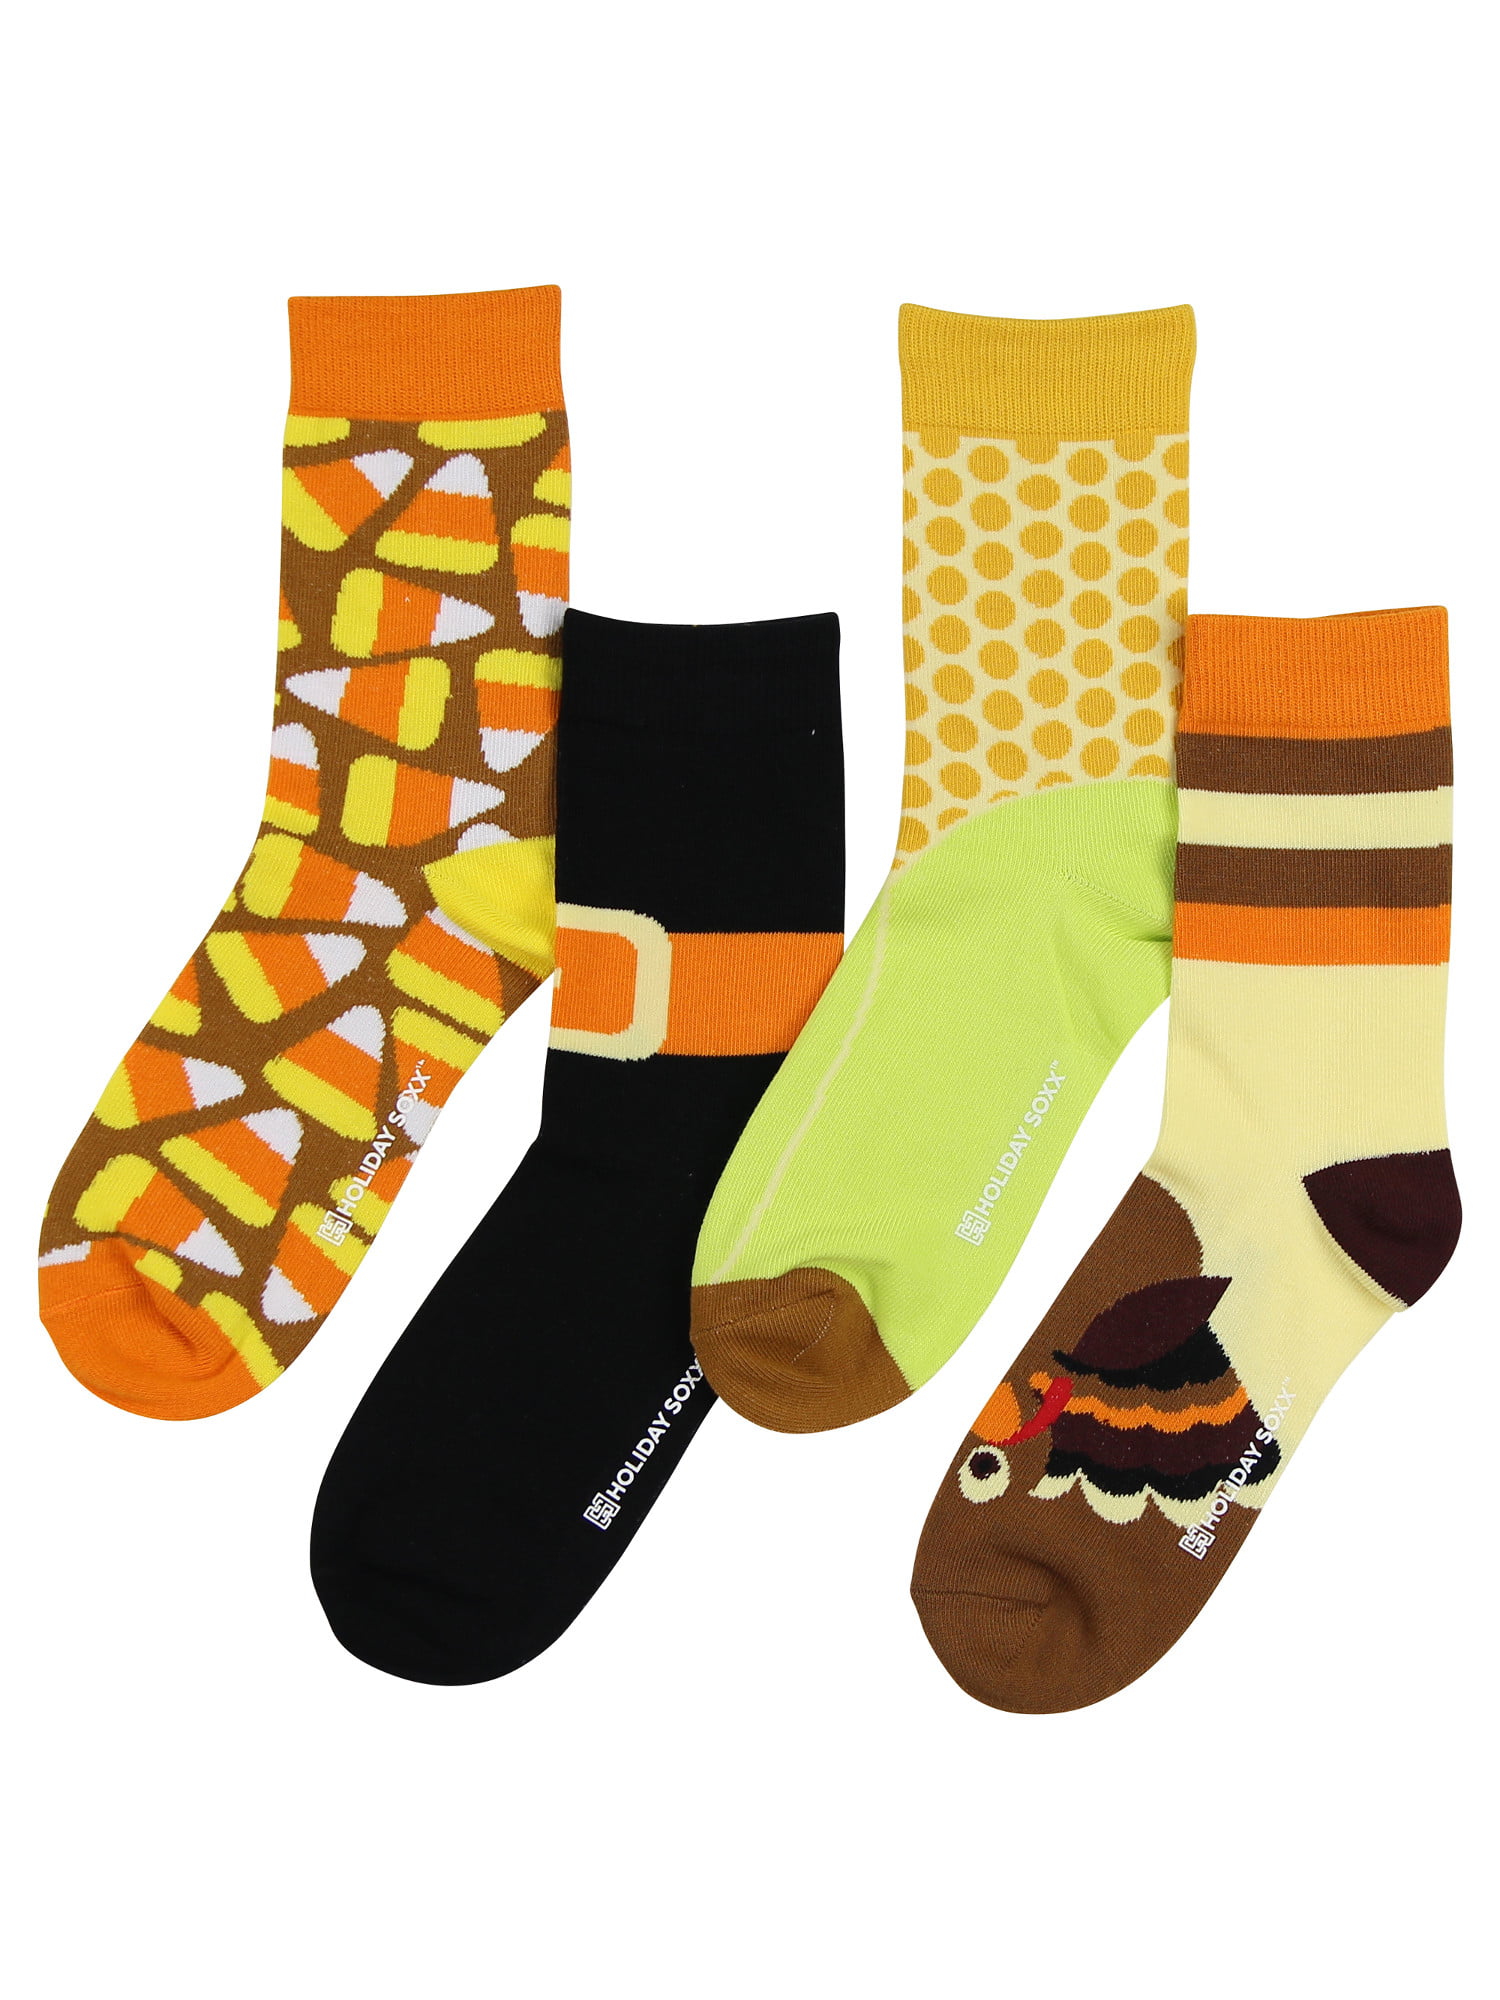 Thanksgiving Fair Isle Socks Fall Icons Women's Crew Novelty Sock Shoe Sz 4-10.5